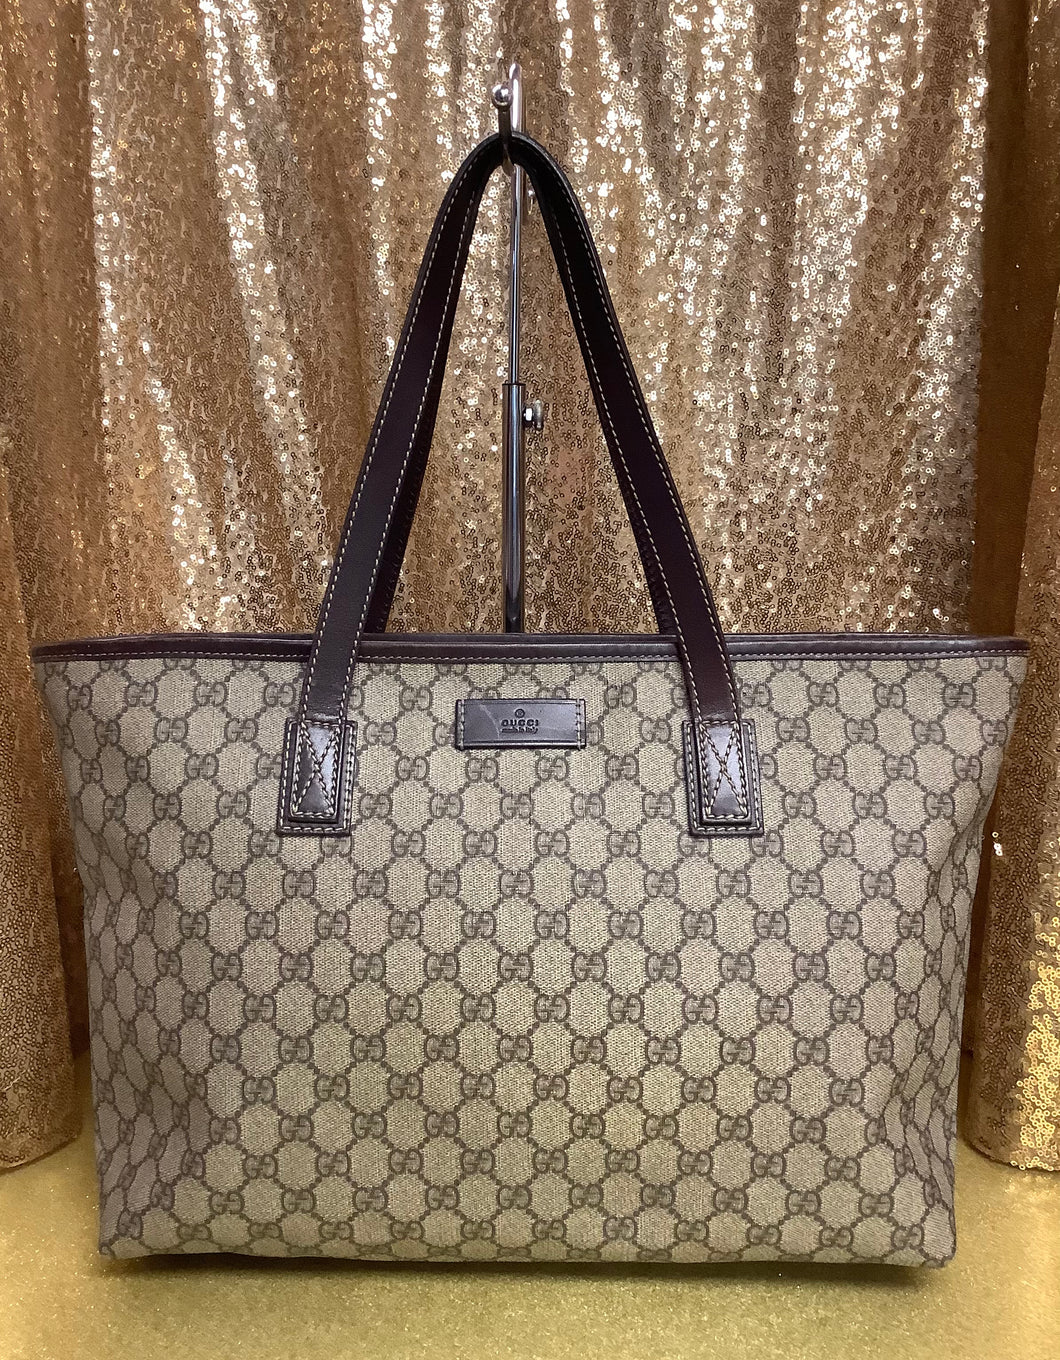 Authentic Gucci Shoulder Bag Tote Signature GG Monogram